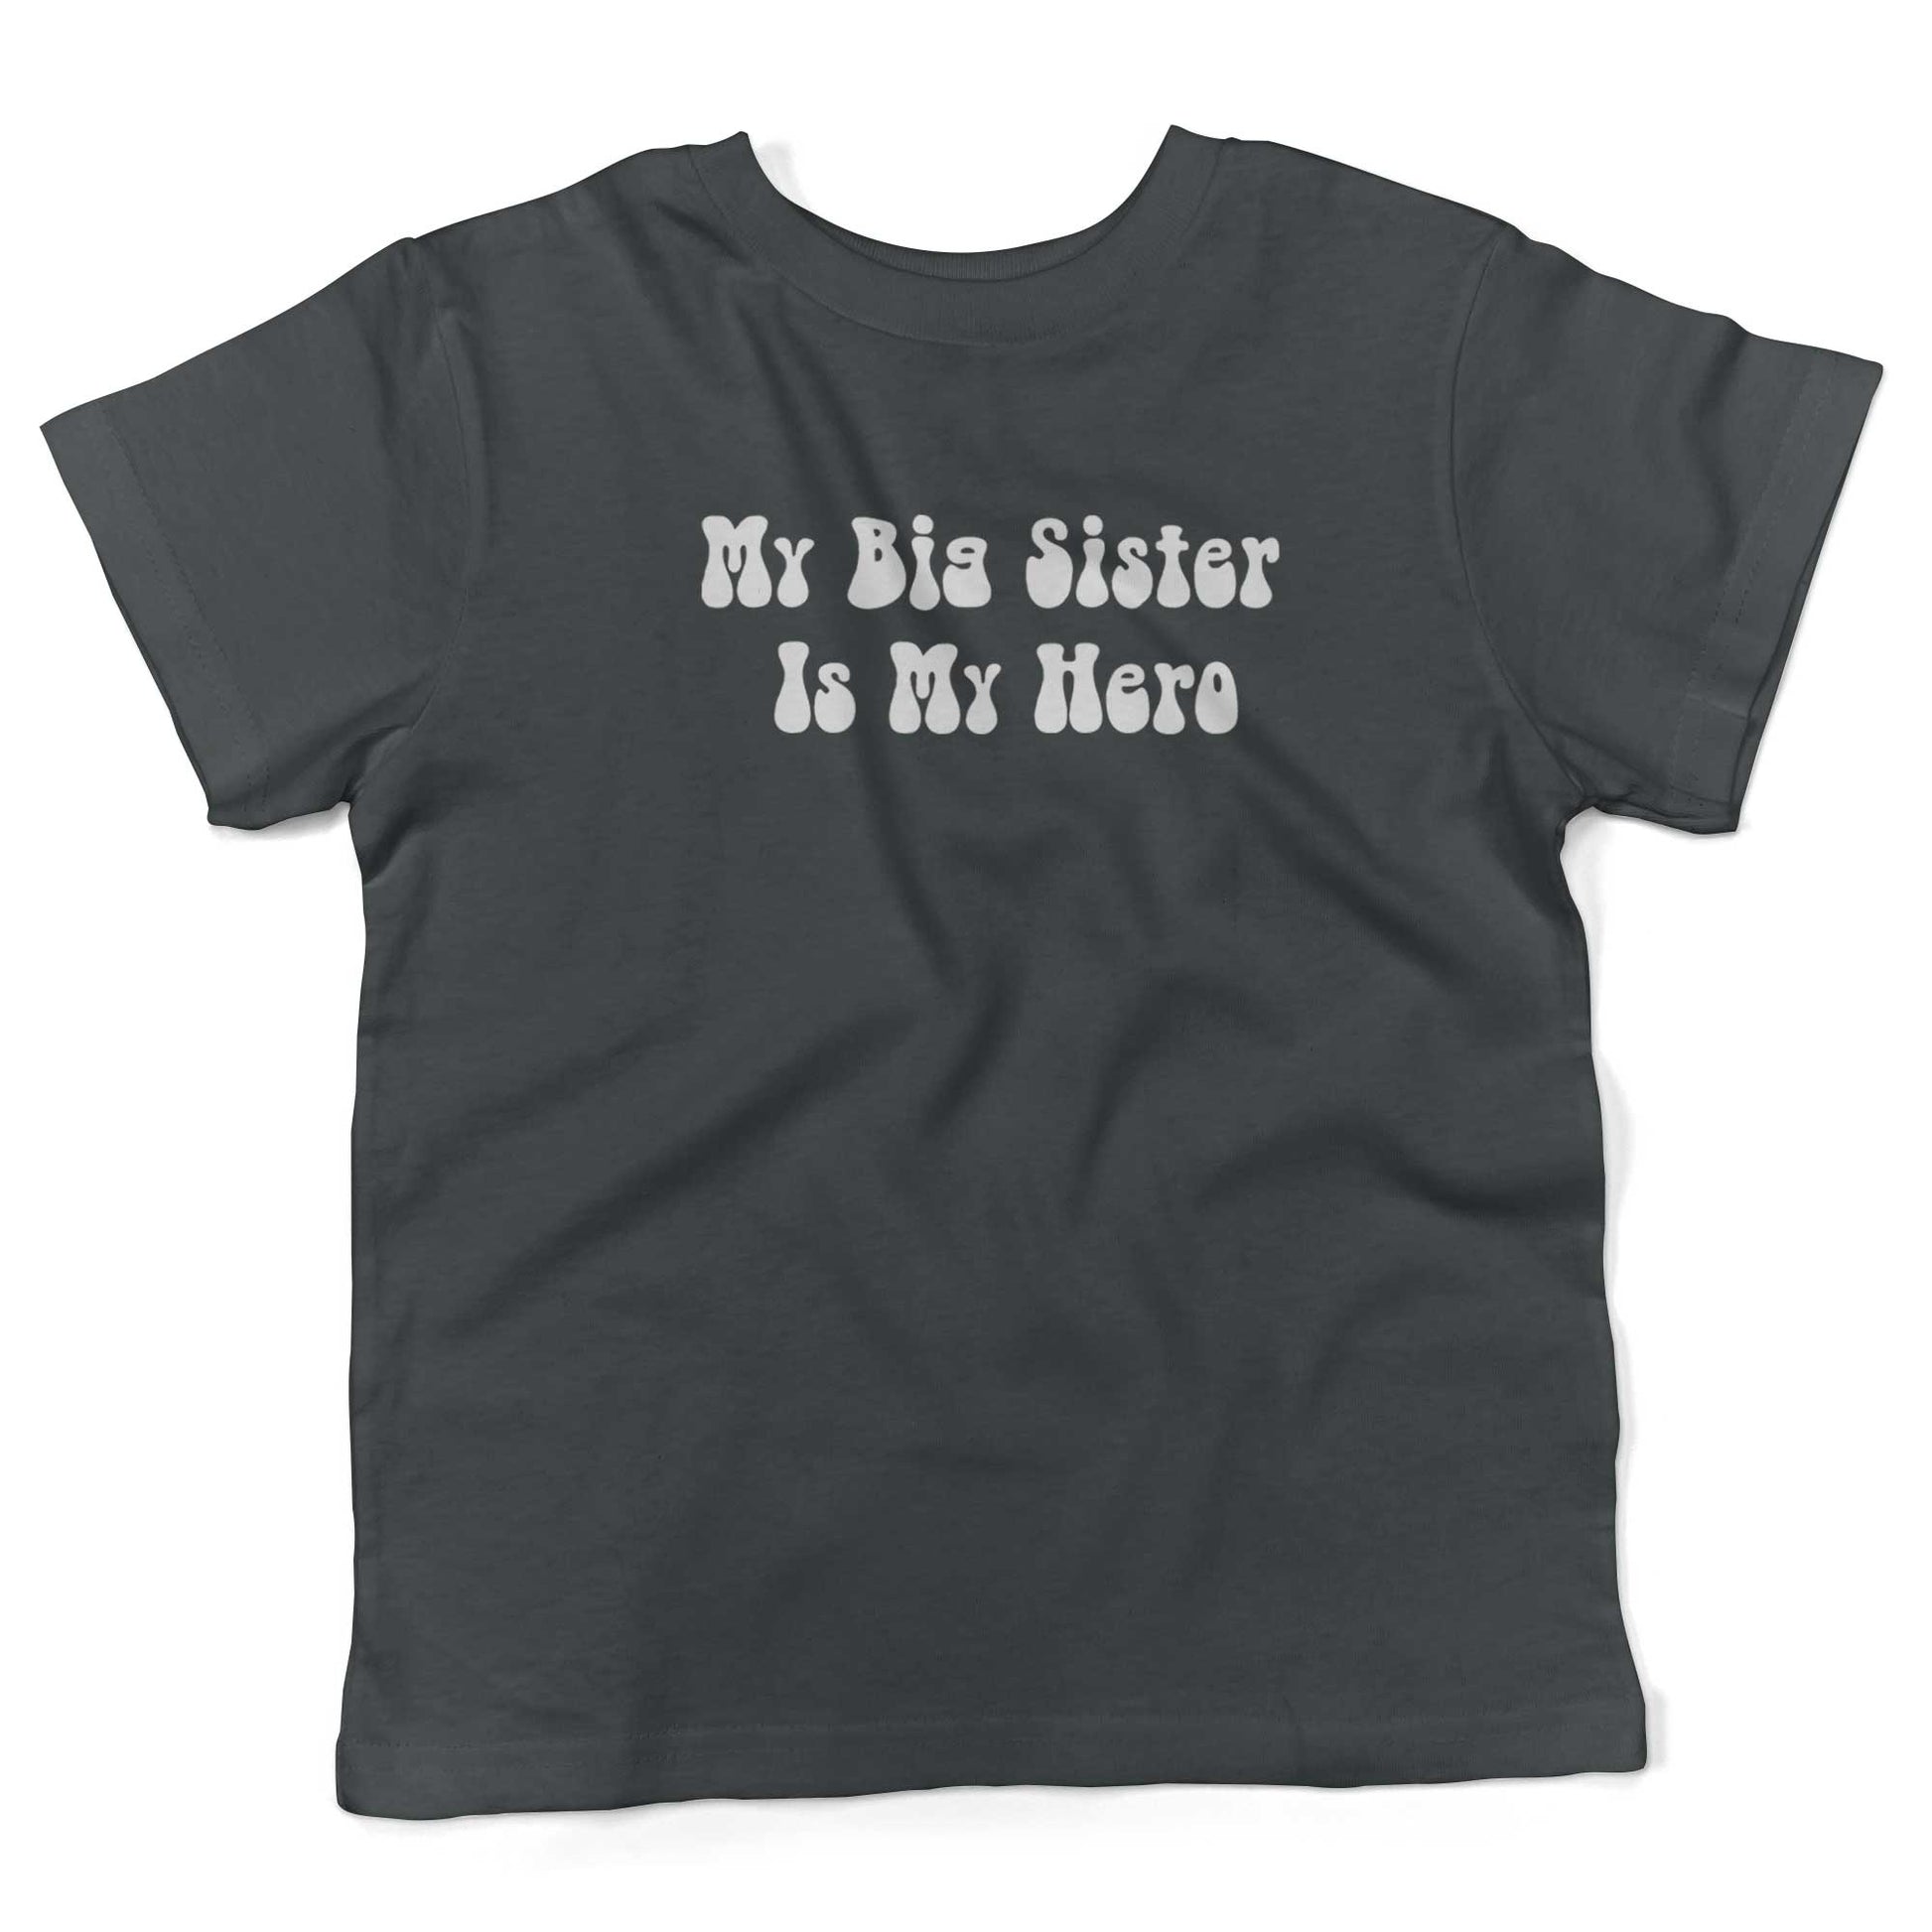 My Big Sister Is My Hero Toddler Shirt-Asphalt-2T